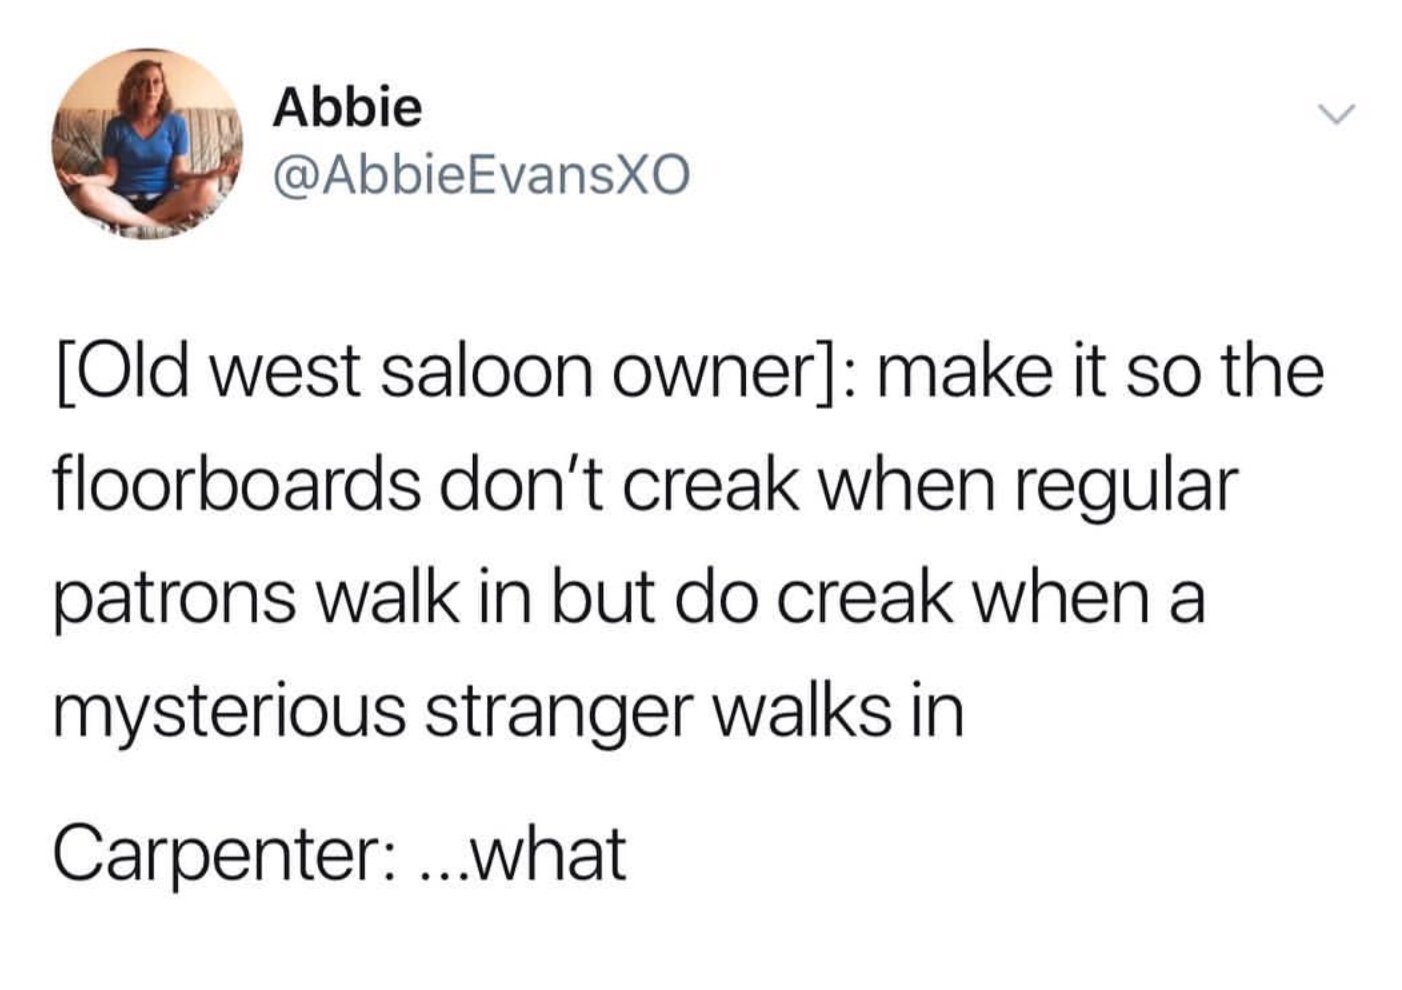 memes - Abbie EvansXO Old west saloon owner make it so the floorboards don't creak when regular patrons walk in but do creak when a mysterious stranger walks in Carpenter ...what